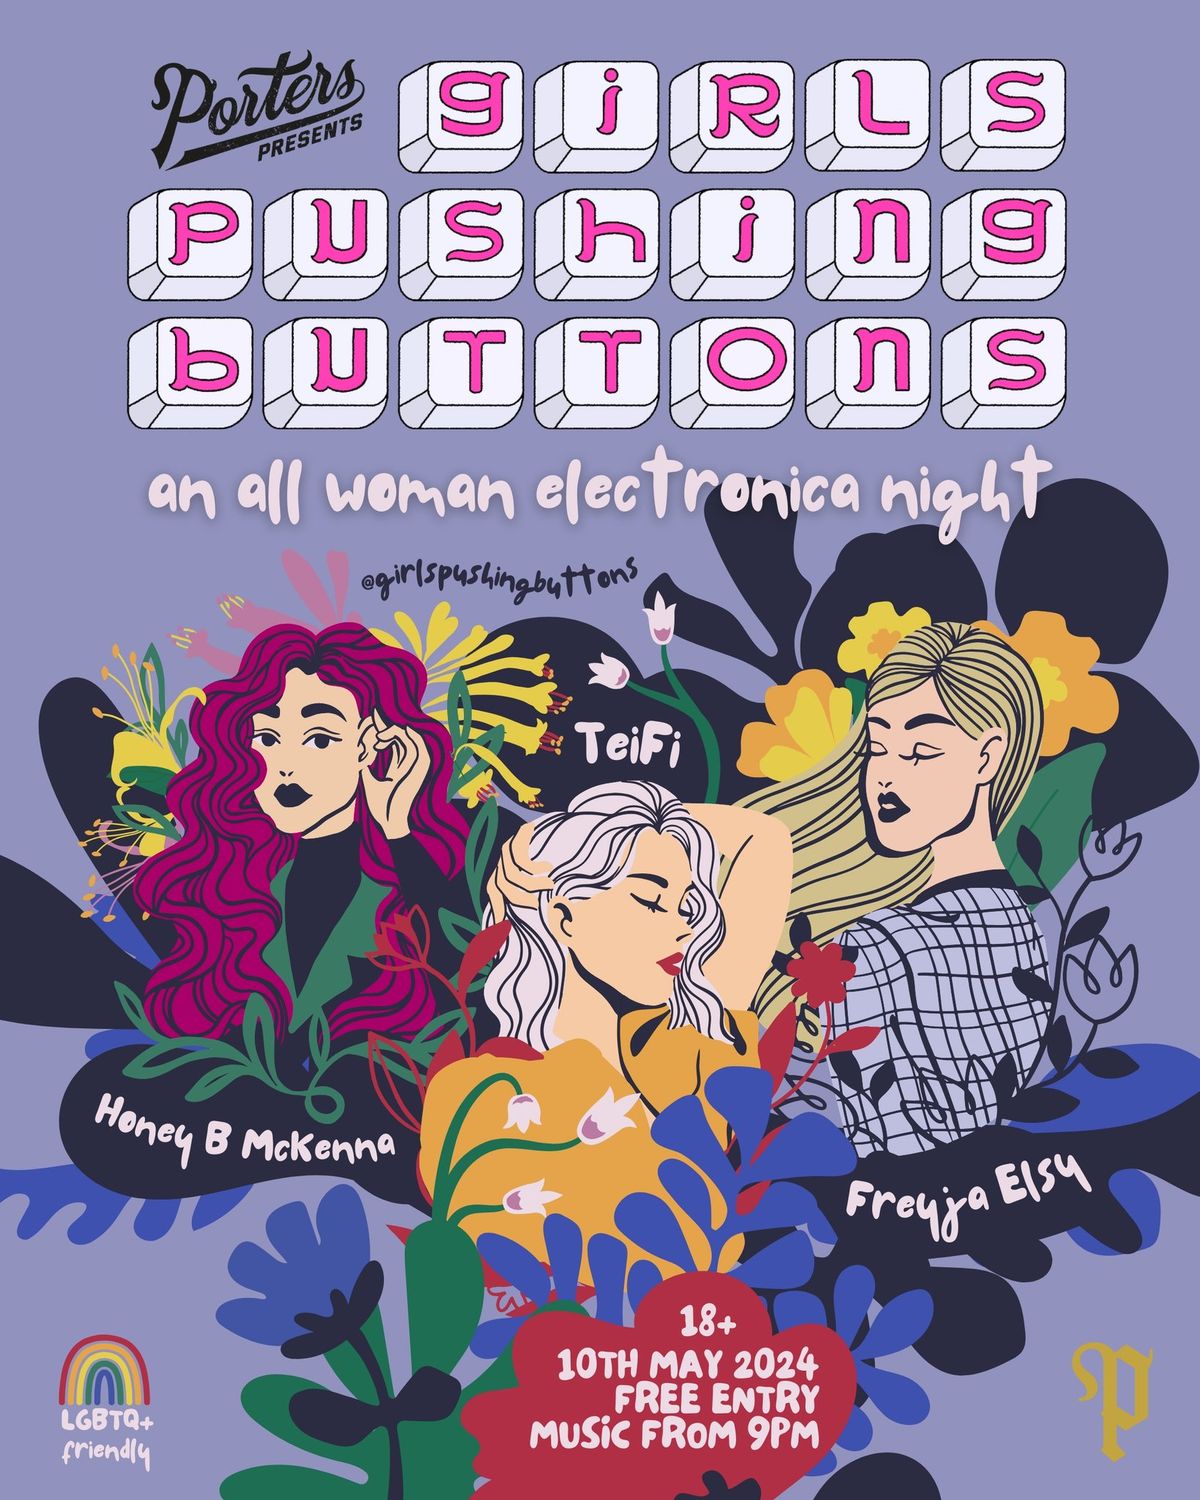 Porter's Presents X GIRLS PUSHING BUTTONS: Honey B Mckenna, TeiFi & Freya Elsy 